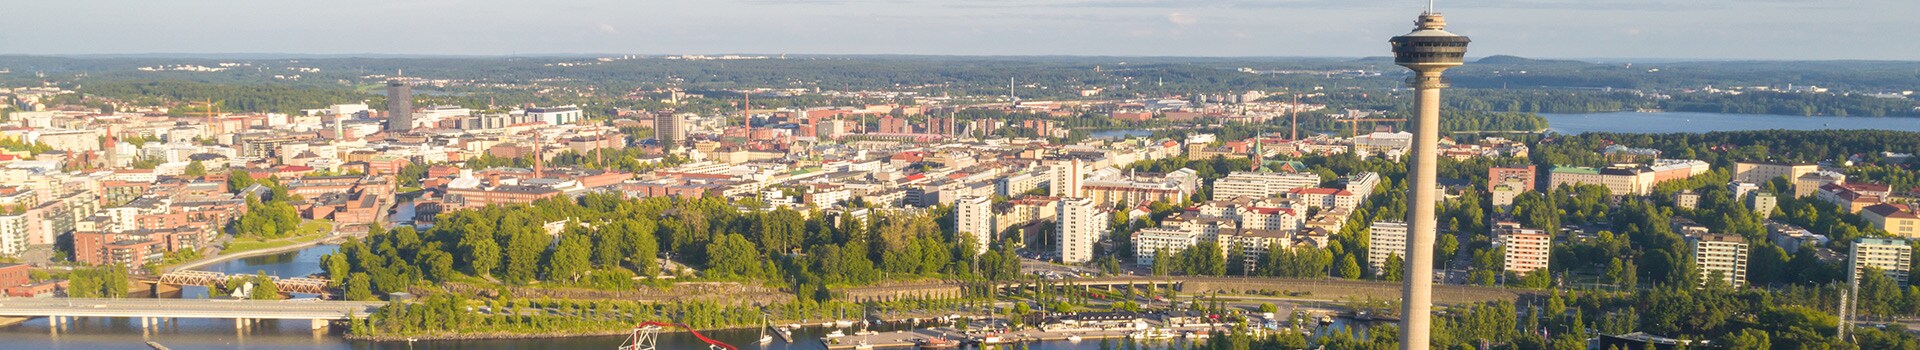 Malaga - Tampere